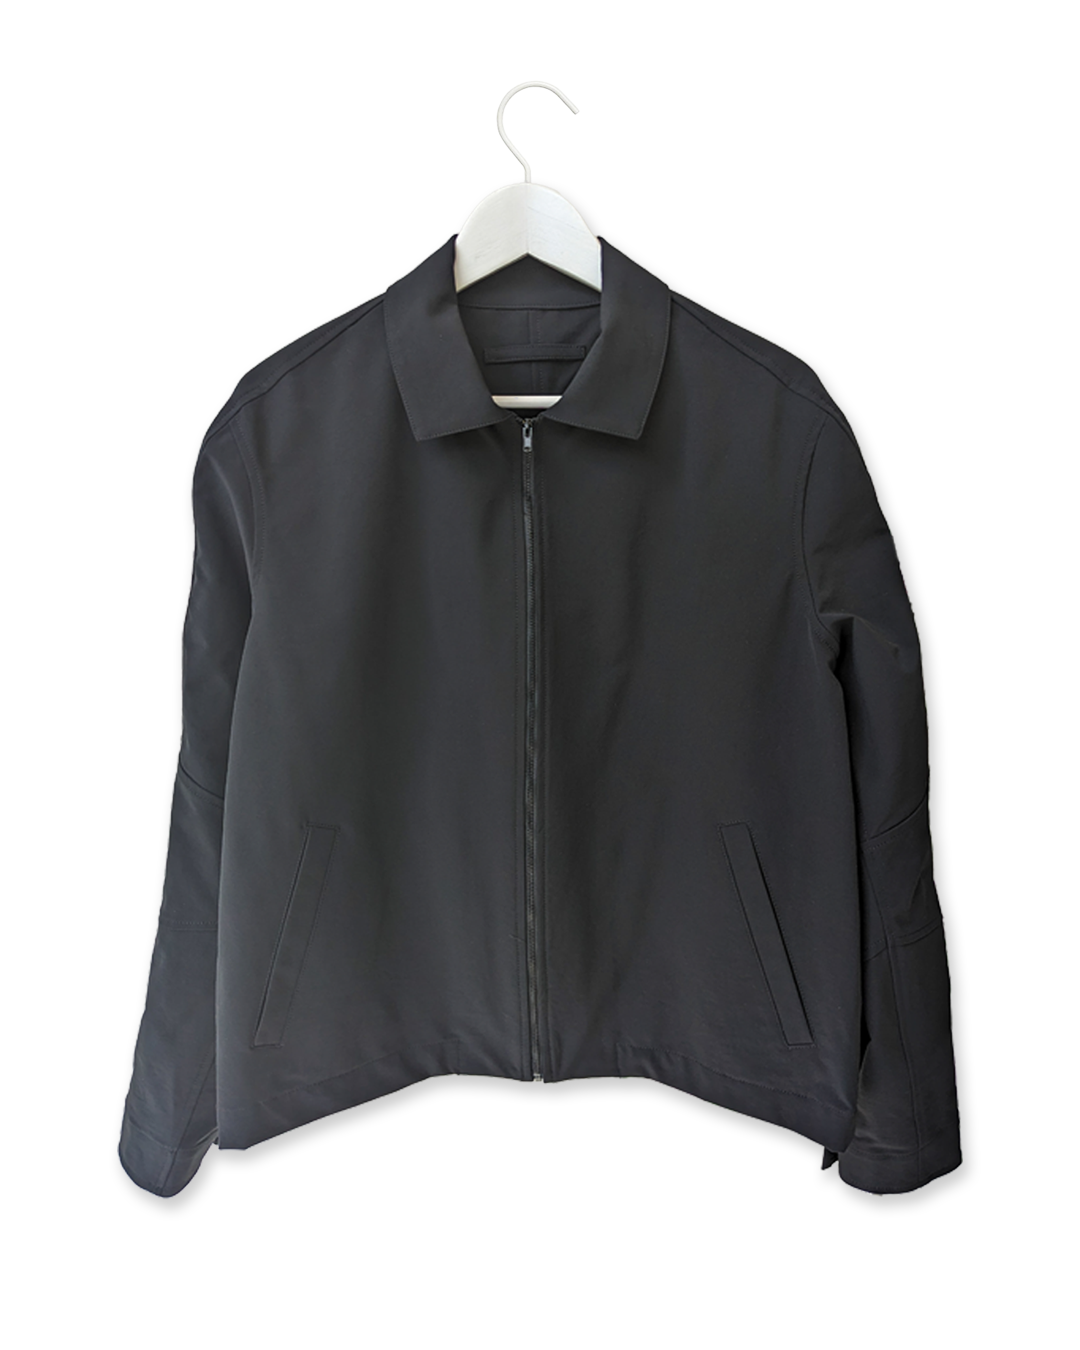 Zip Up Shirt Jacket in Black Tech Stretch